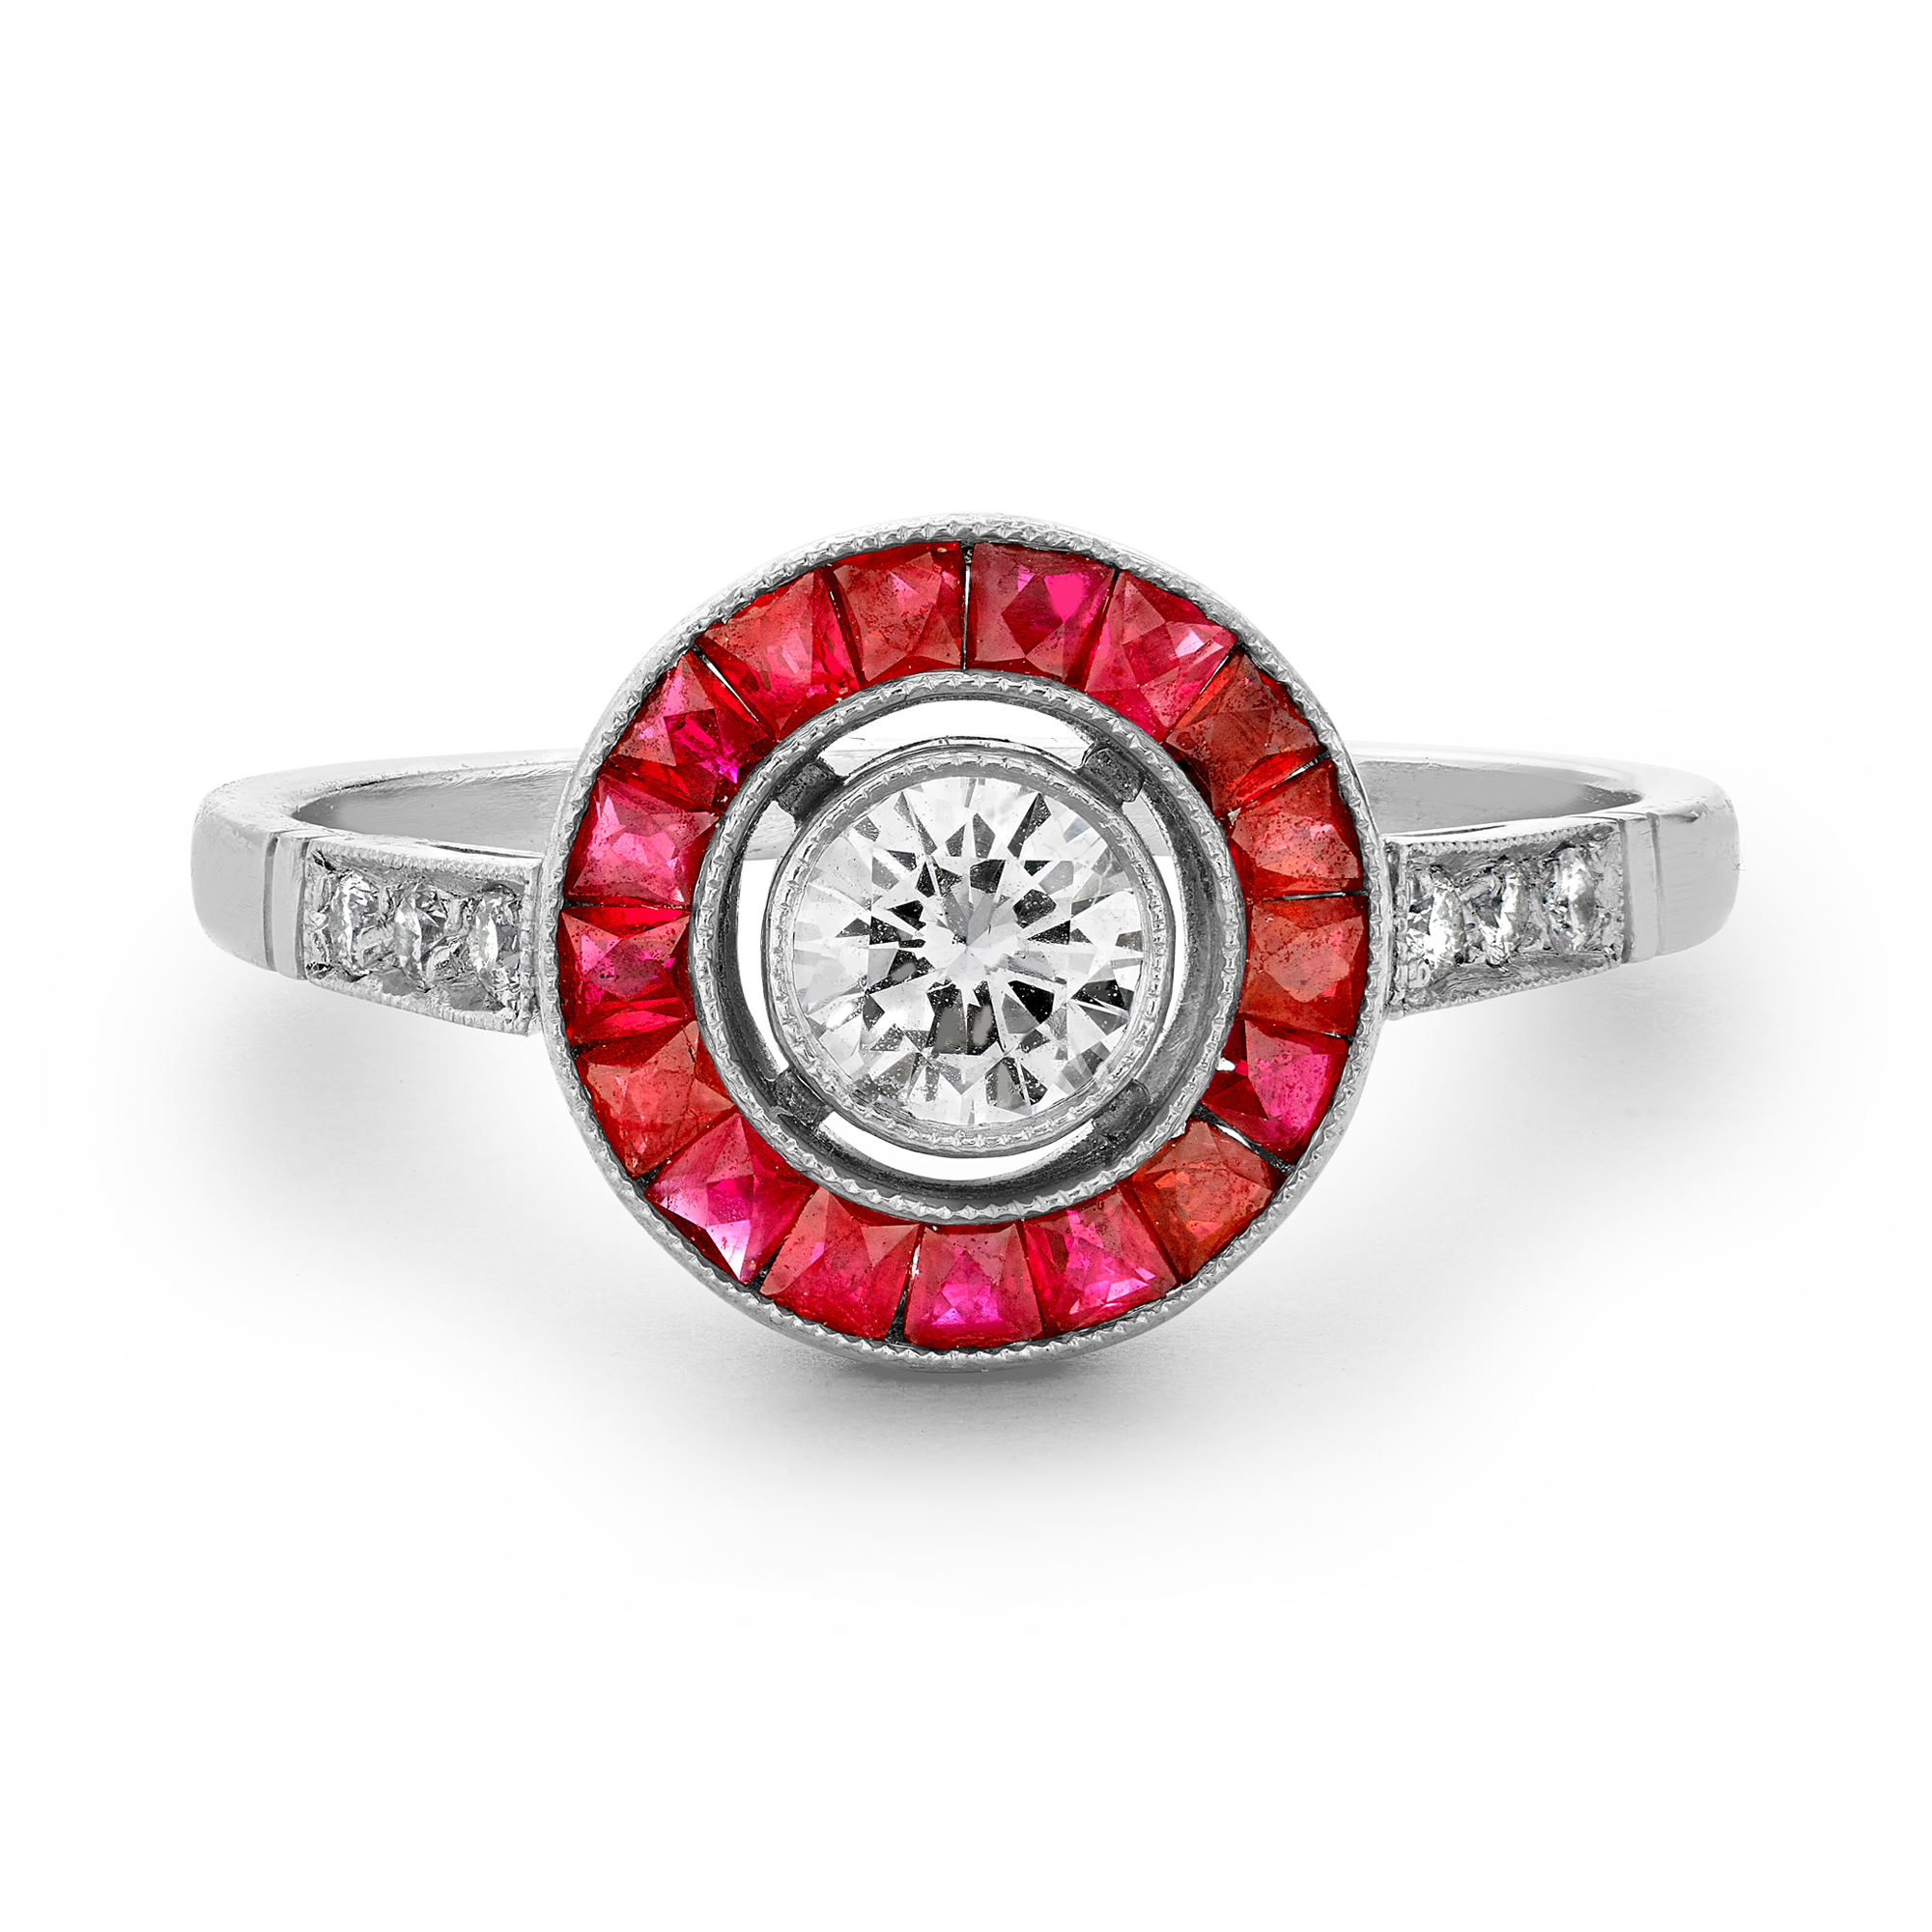 Art Deco Inspired Diamond & Ruby Target Ring Brilliant & Calibre Cut, Millegrain Set_2